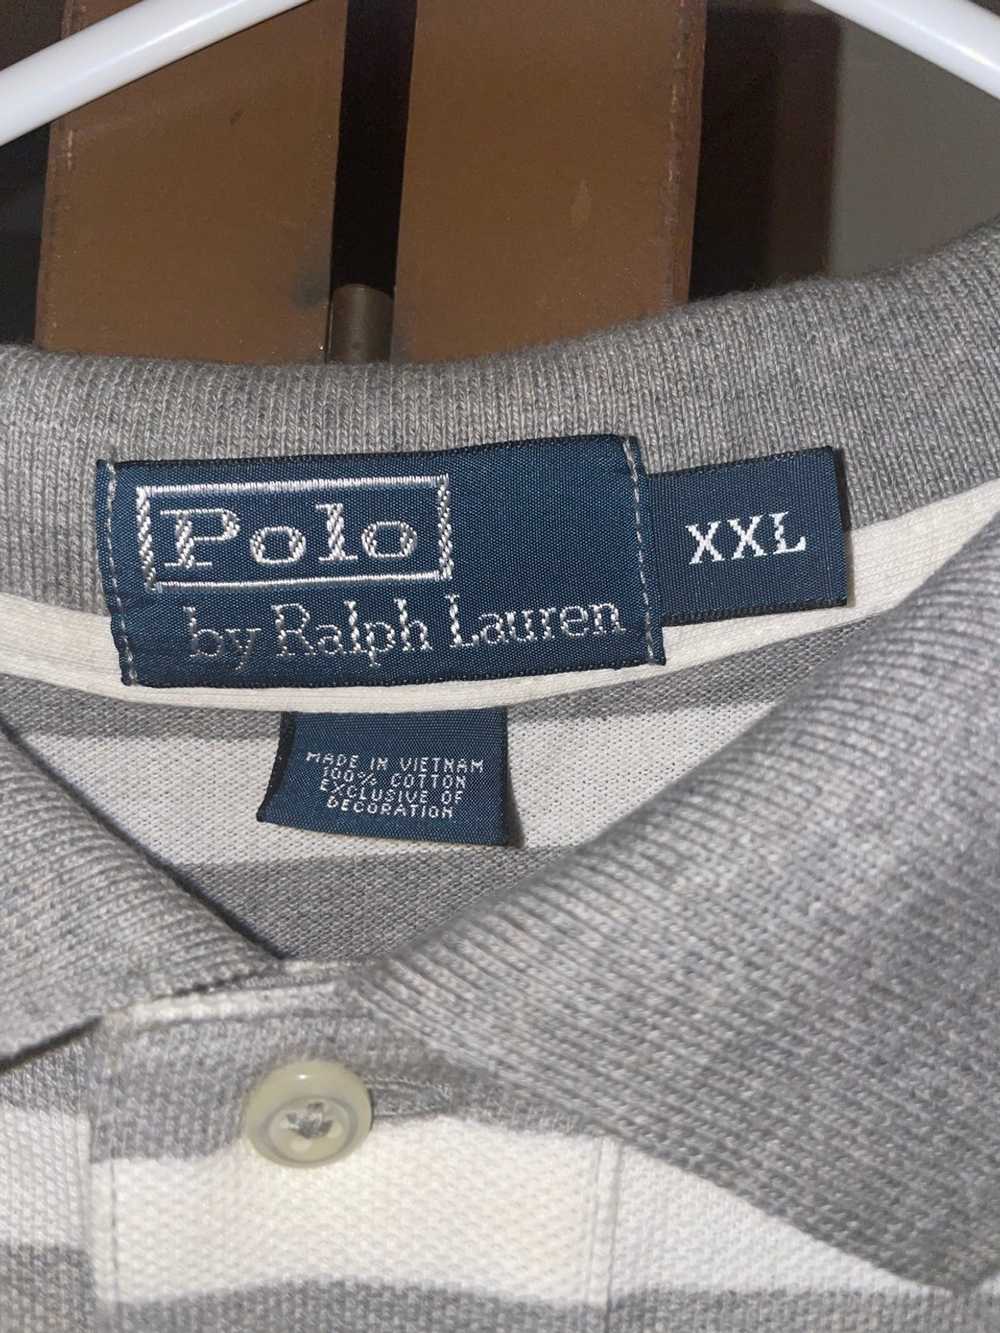 Polo Ralph Lauren Polo by Ralph Lauren - image 2